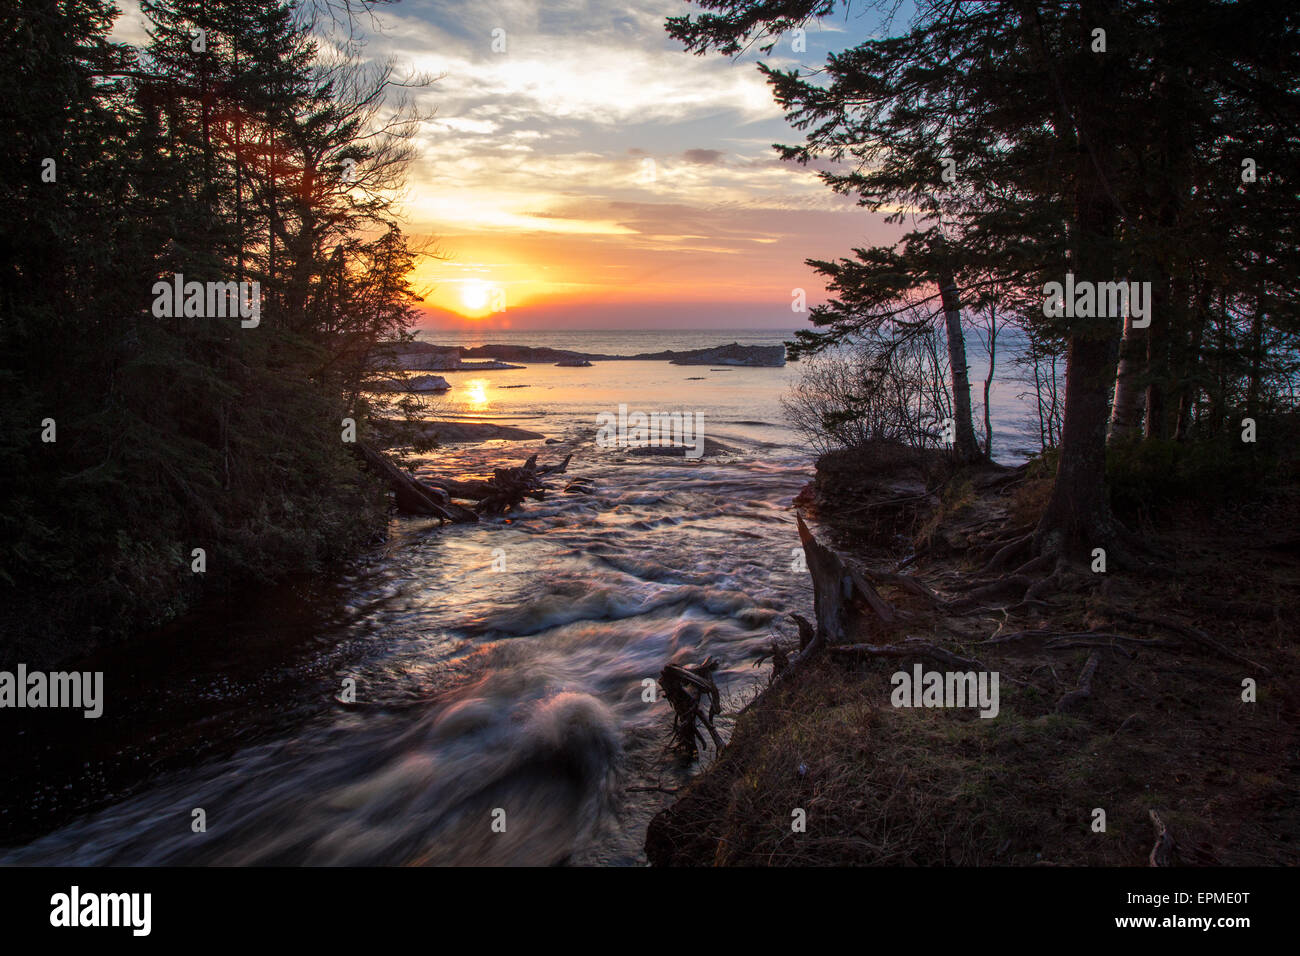 Hurrikan-Fluss Sonnenuntergang. Die Hurrikan-Fluss stürzt in Lake Superior bei Sonnenuntergang. Pictured Rocks National Lakeshore. Michigan. Stockfoto